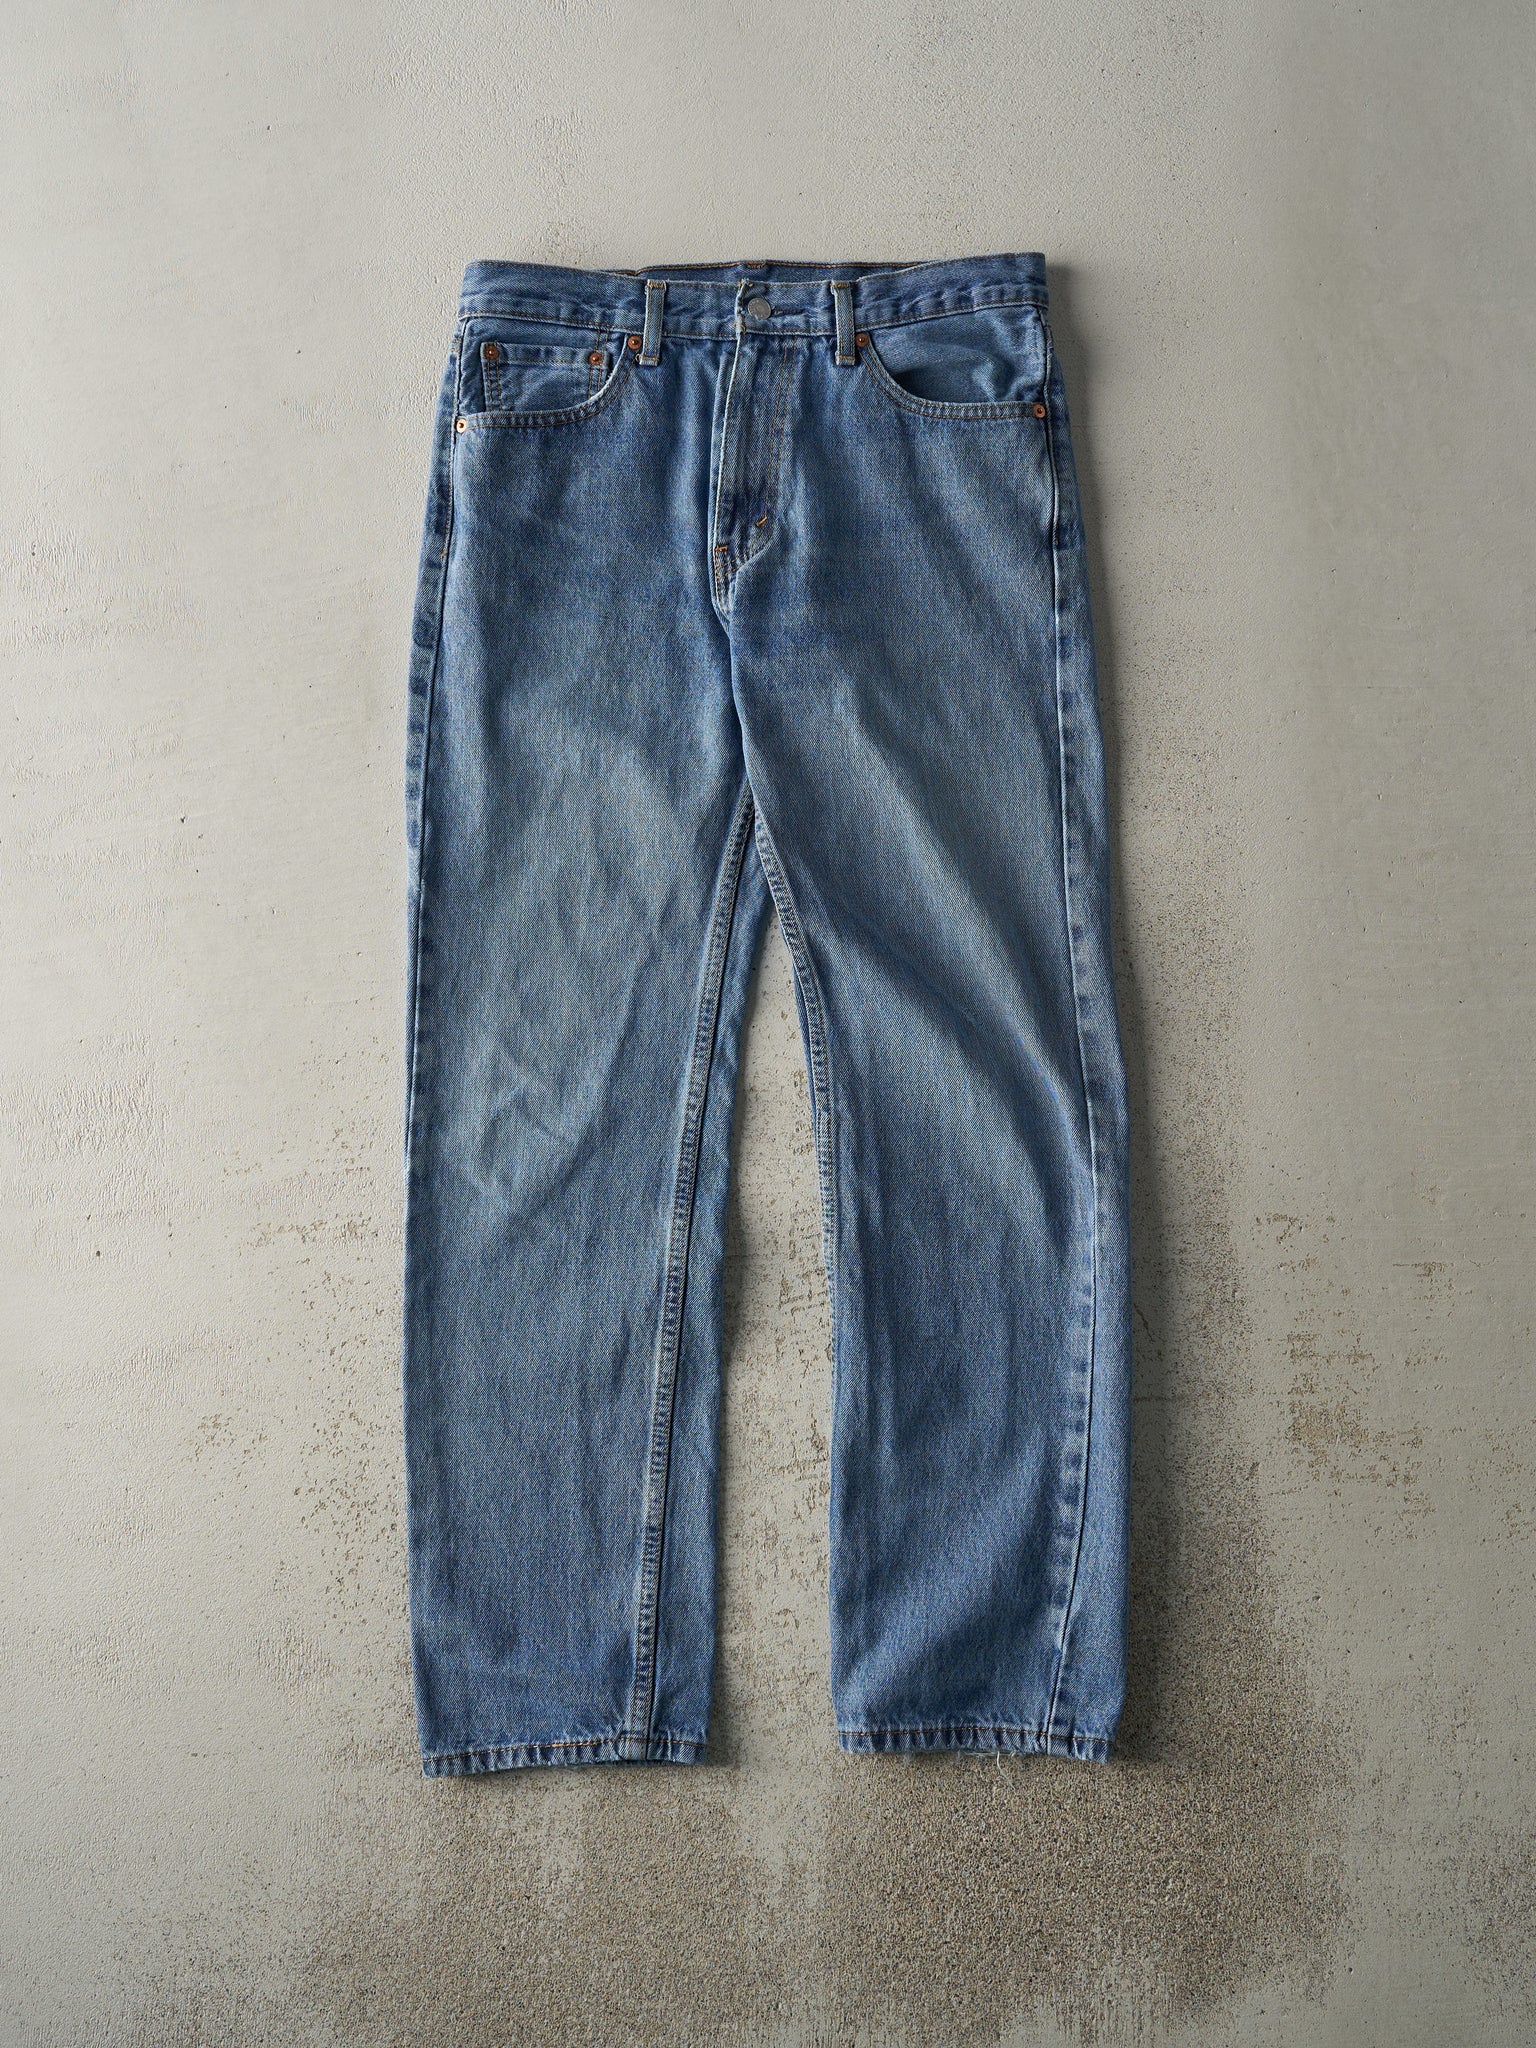 Vintage Y2K Light Wash Levi's 505 Jeans (32x31)